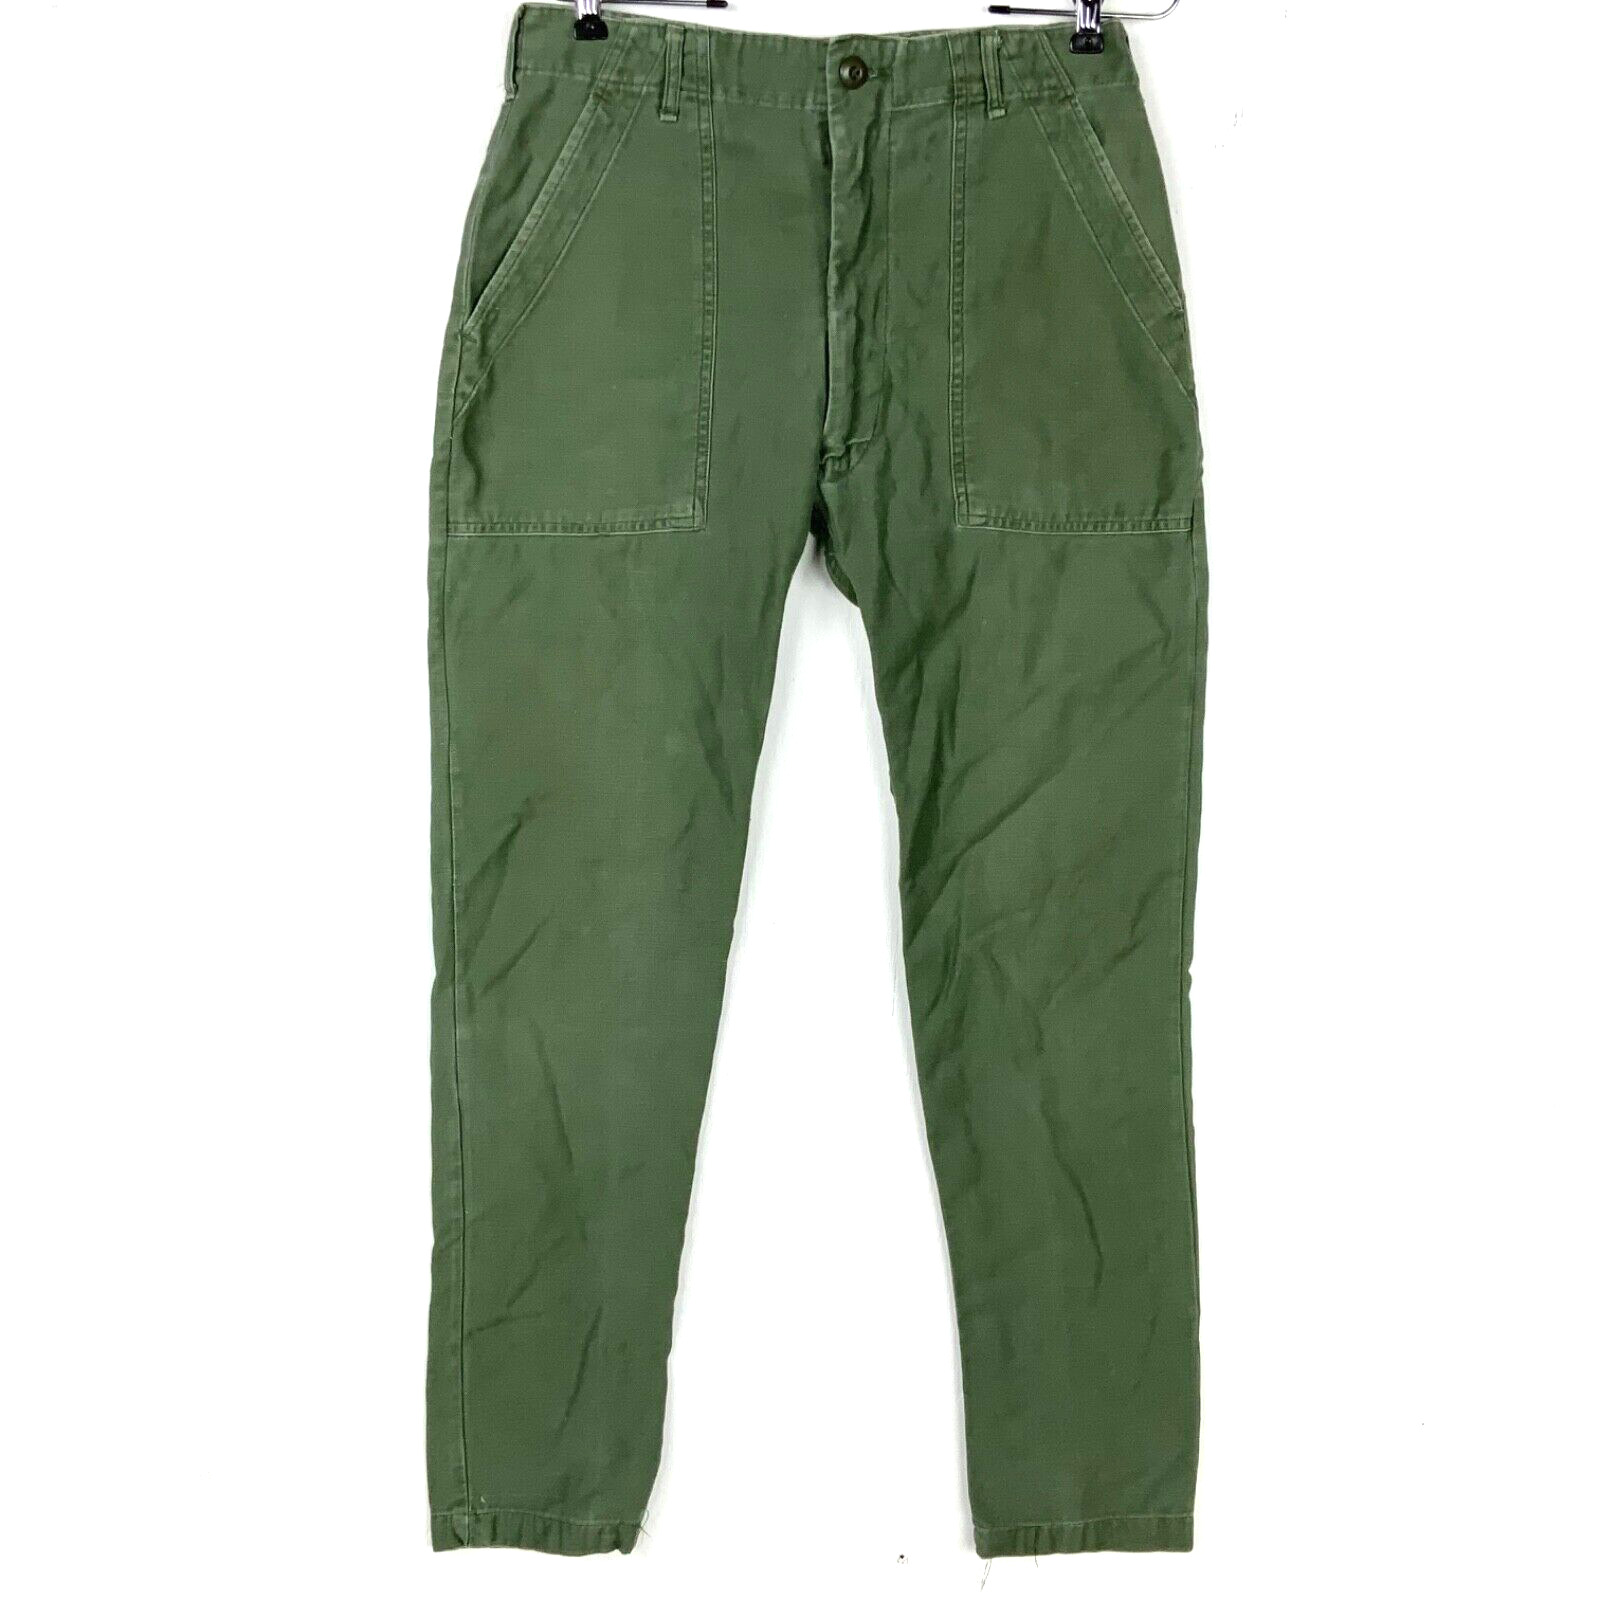 Vintage Military Og-107 Trousers Size 32 x 31 Green Vietnam Era 1969